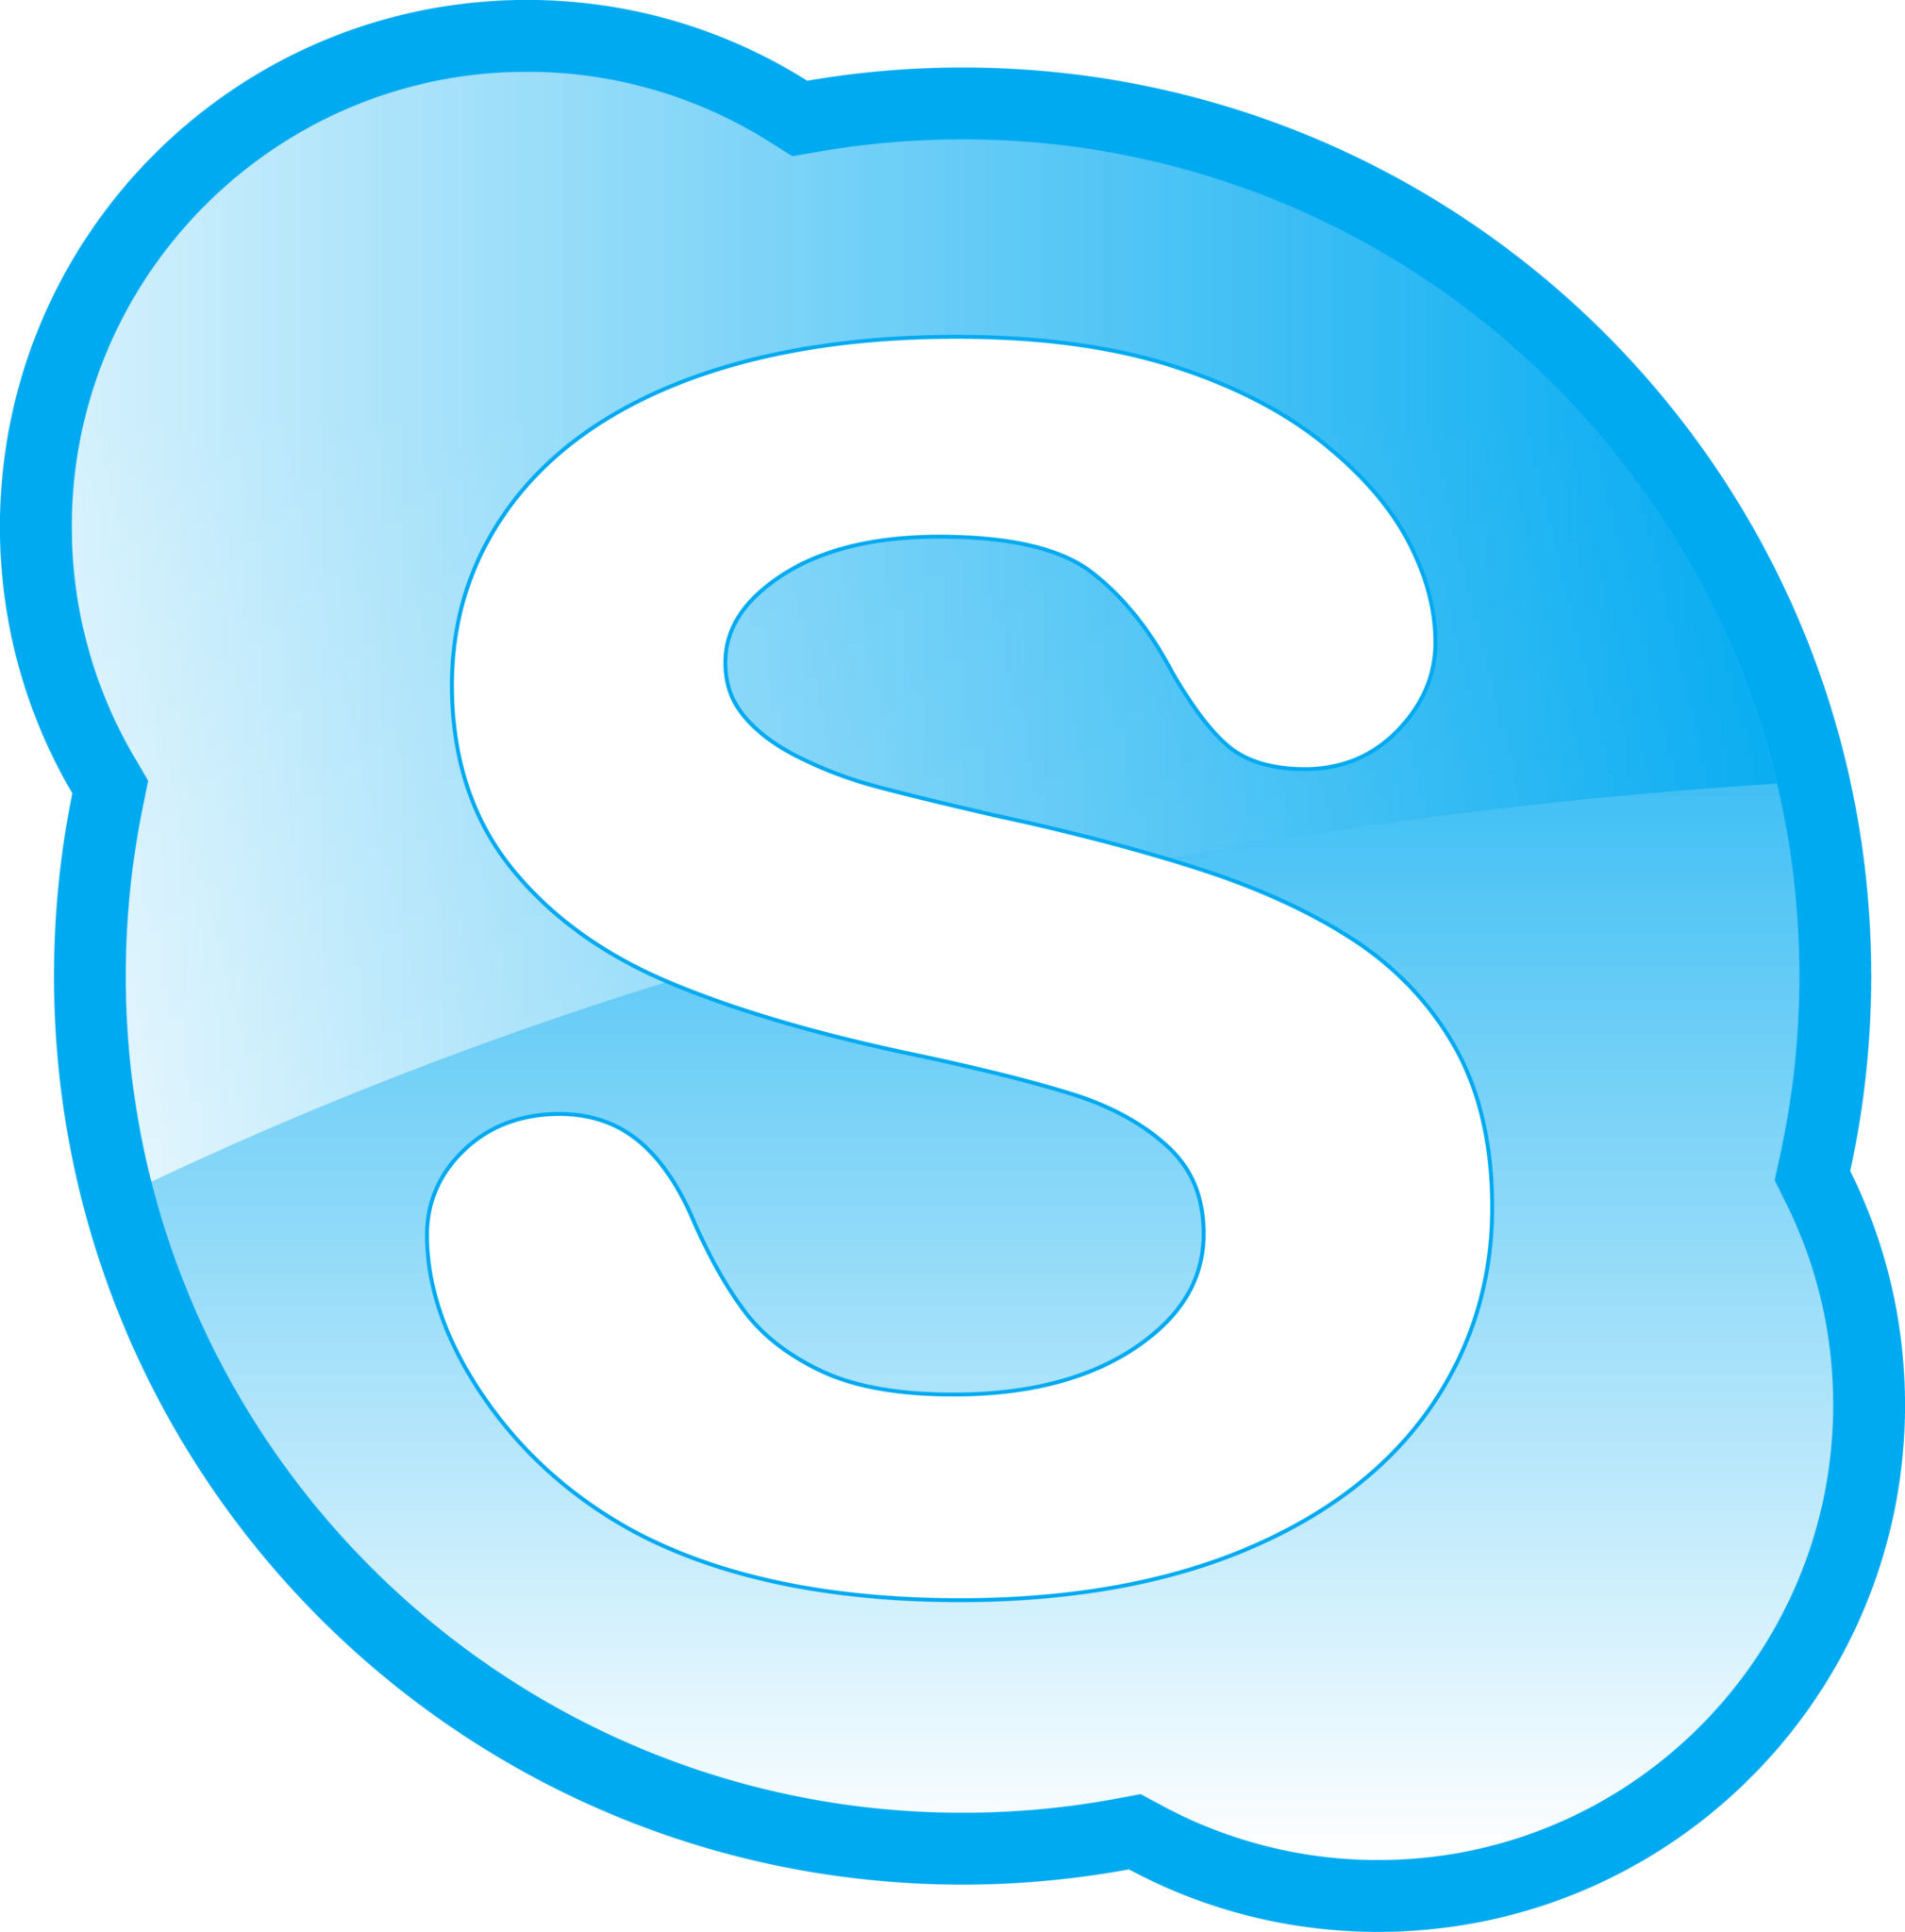 skype icon transparent